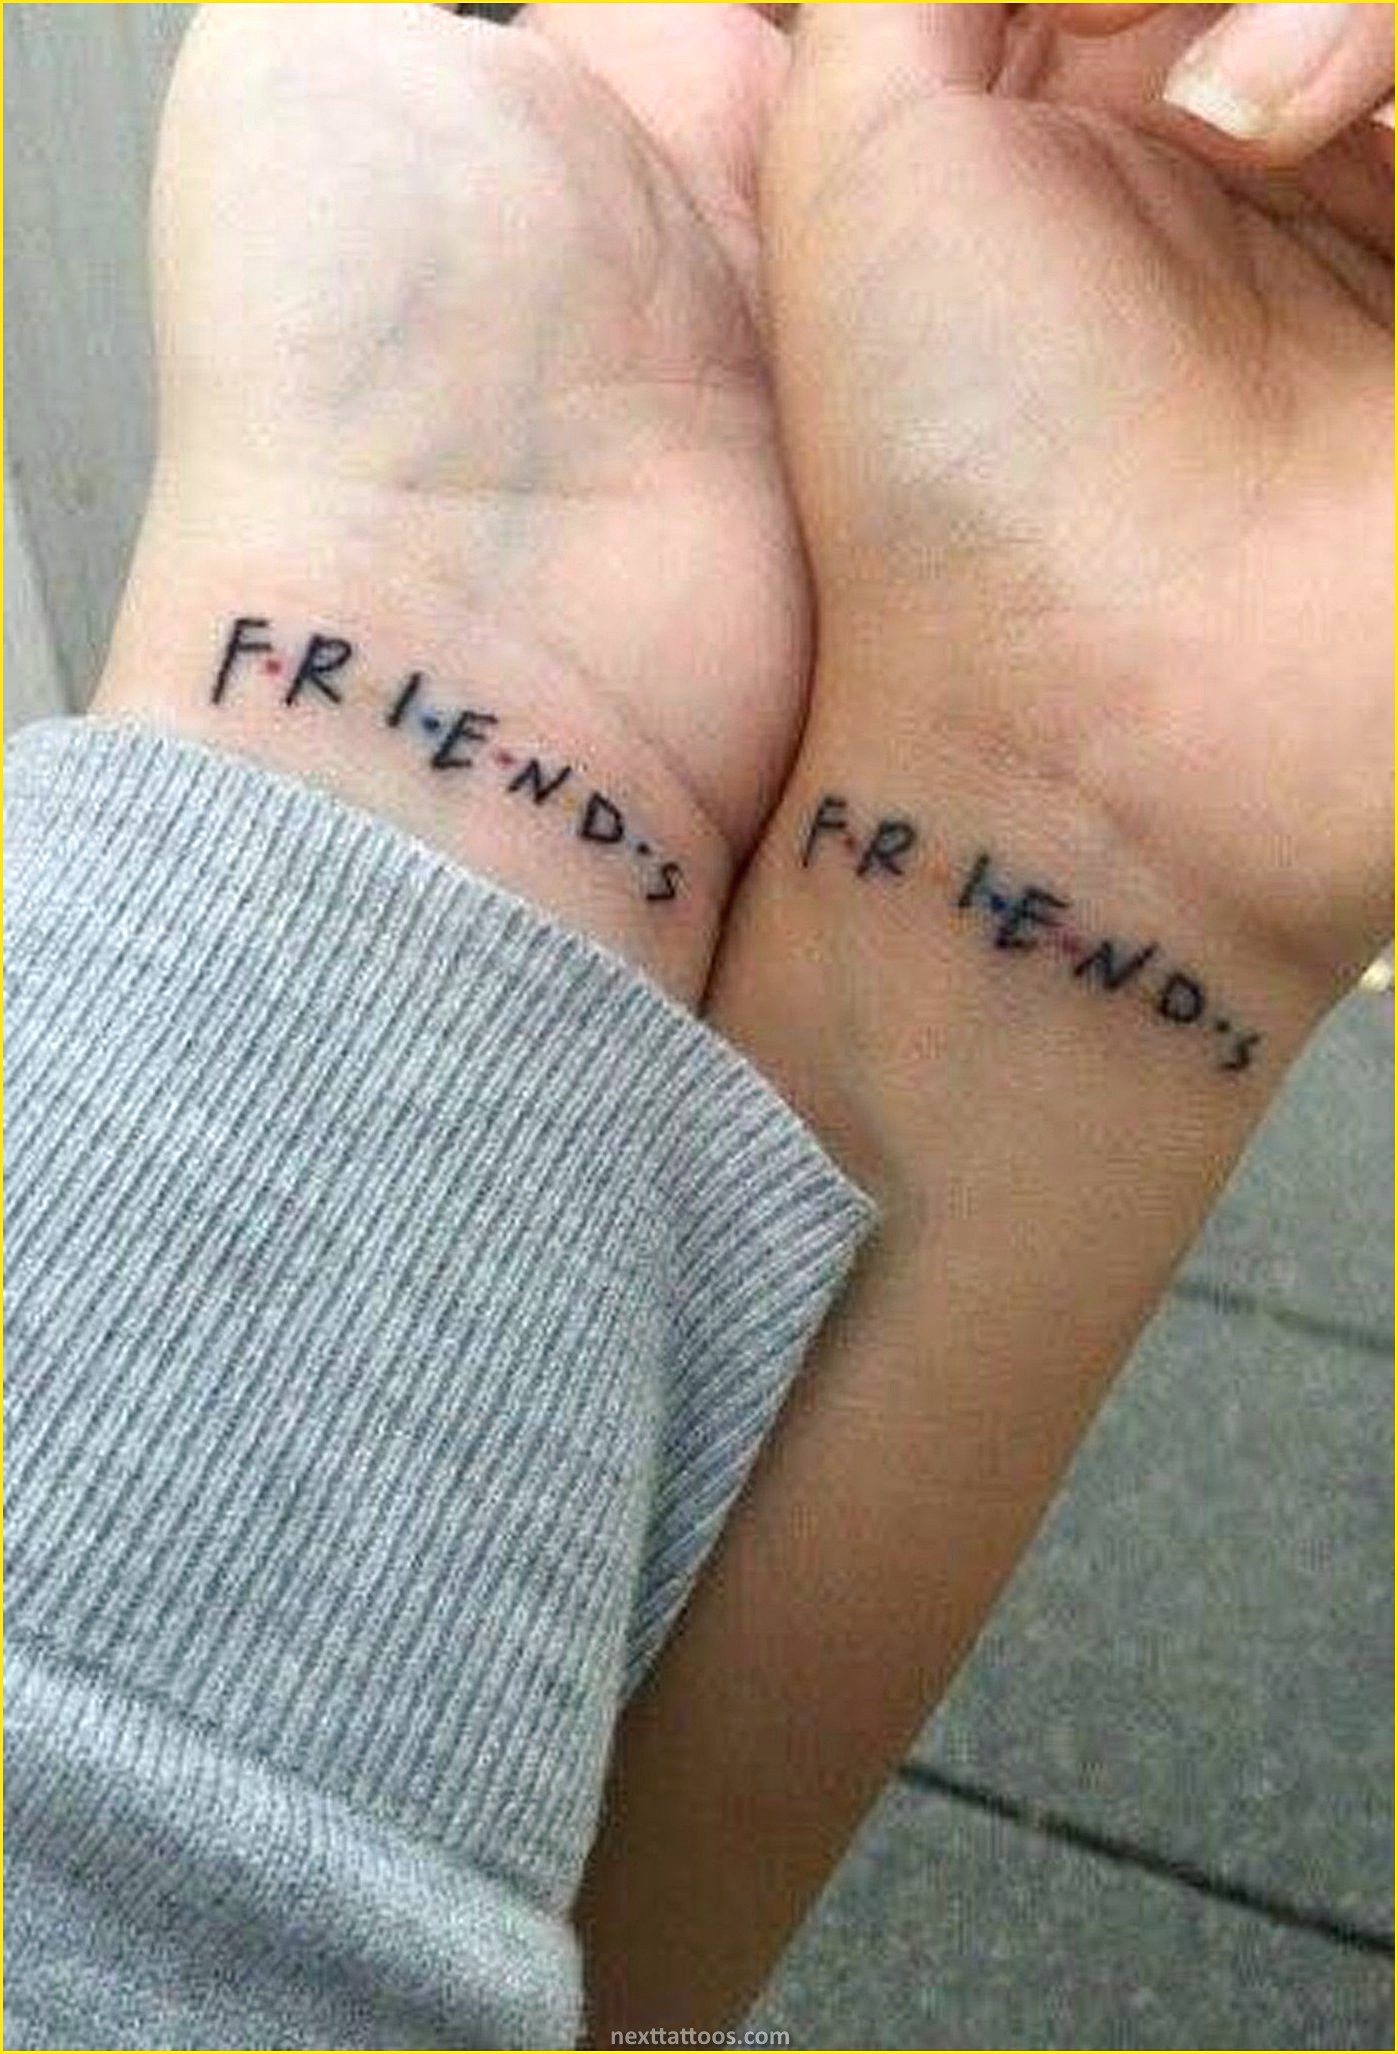 Male Female Best Friend Tattoos